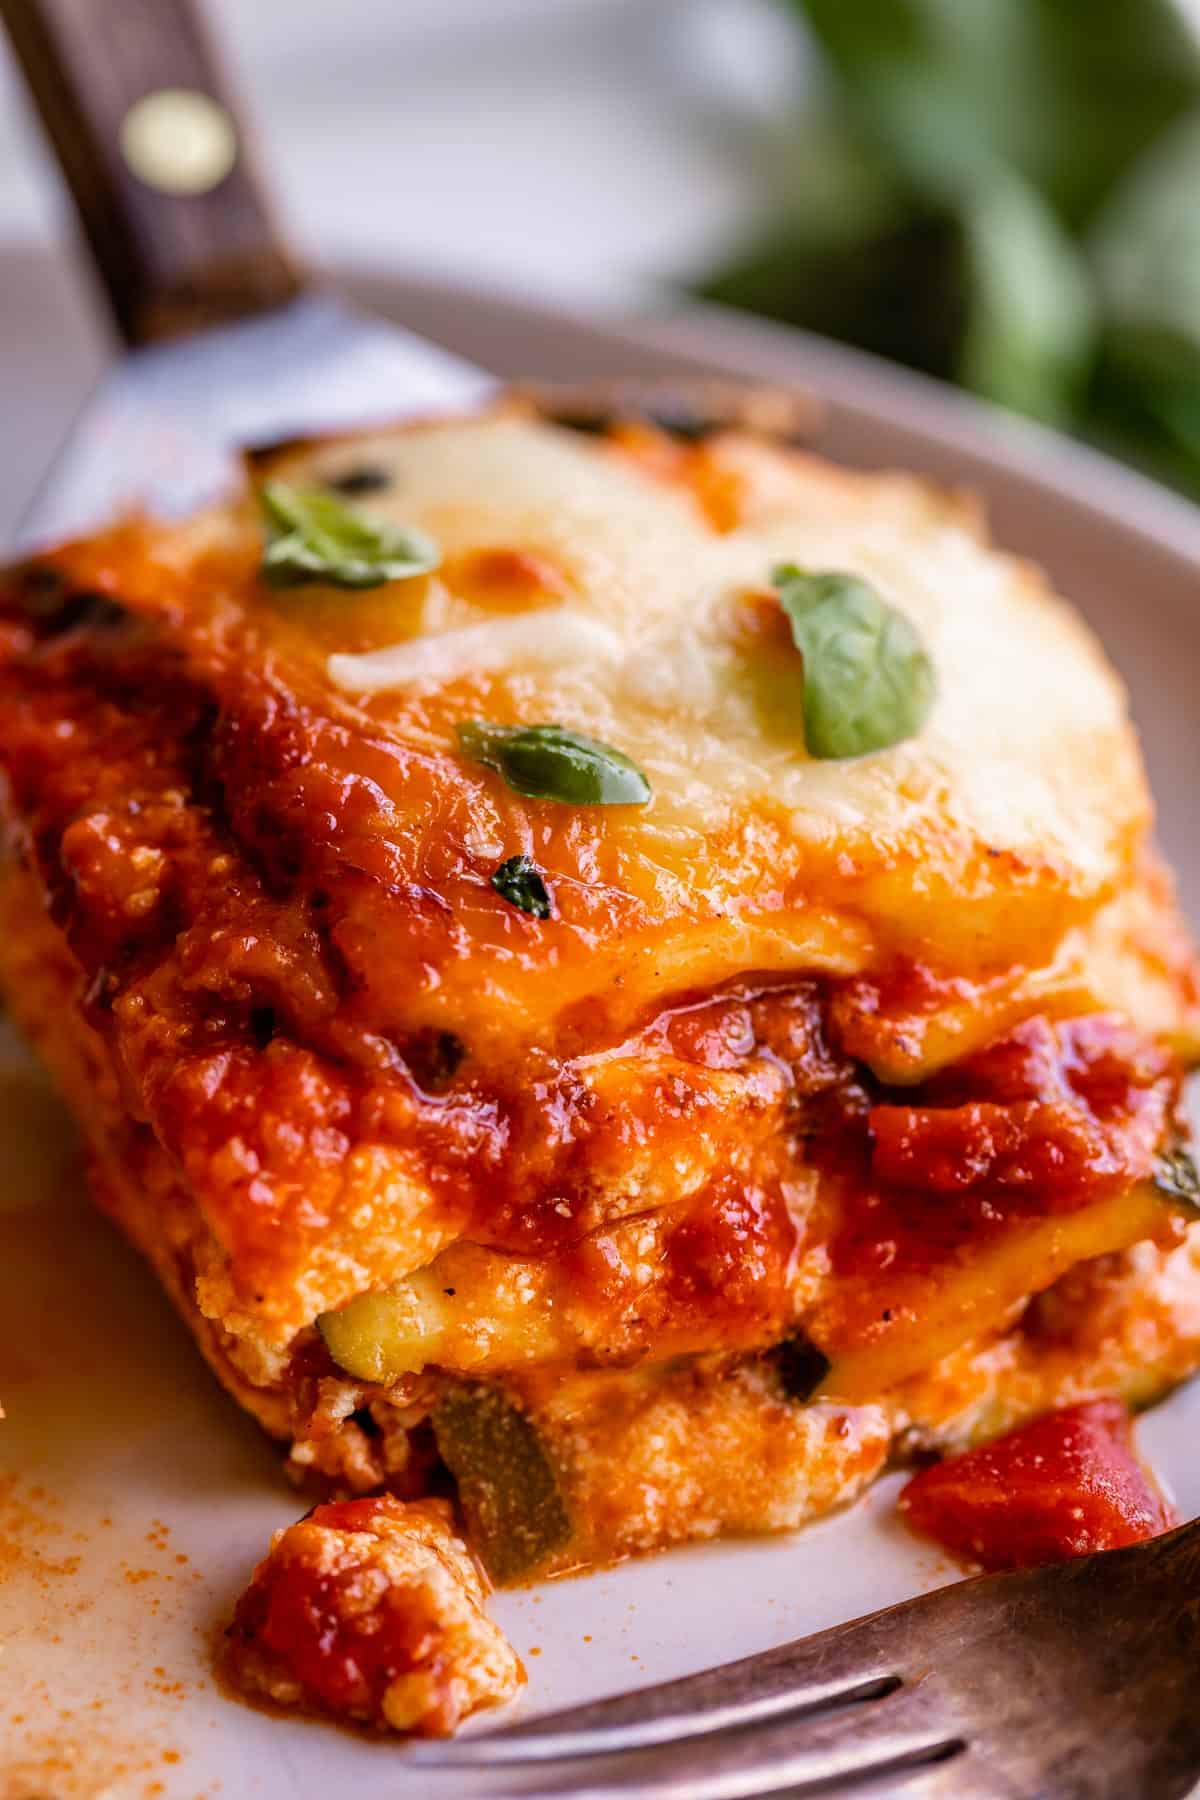 Zucchini Lasagna Recipe (Easy and Cheesy!) - The Food Charlatan